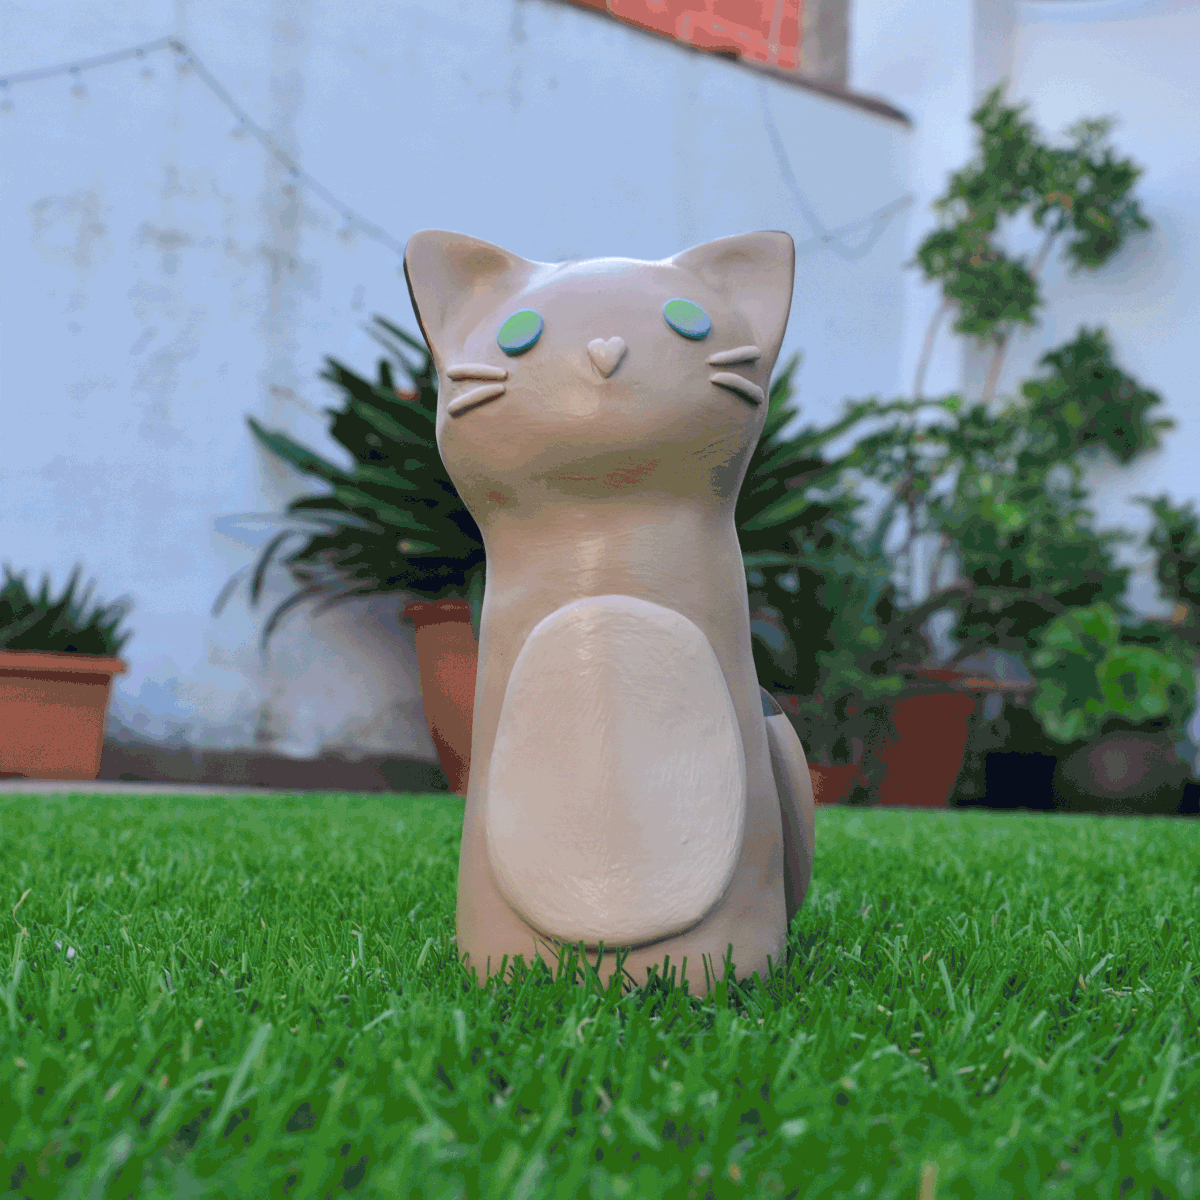 #ceramic #ceramica #keramik #sculpture #escultura #handmade #handbuilt #hechoamano